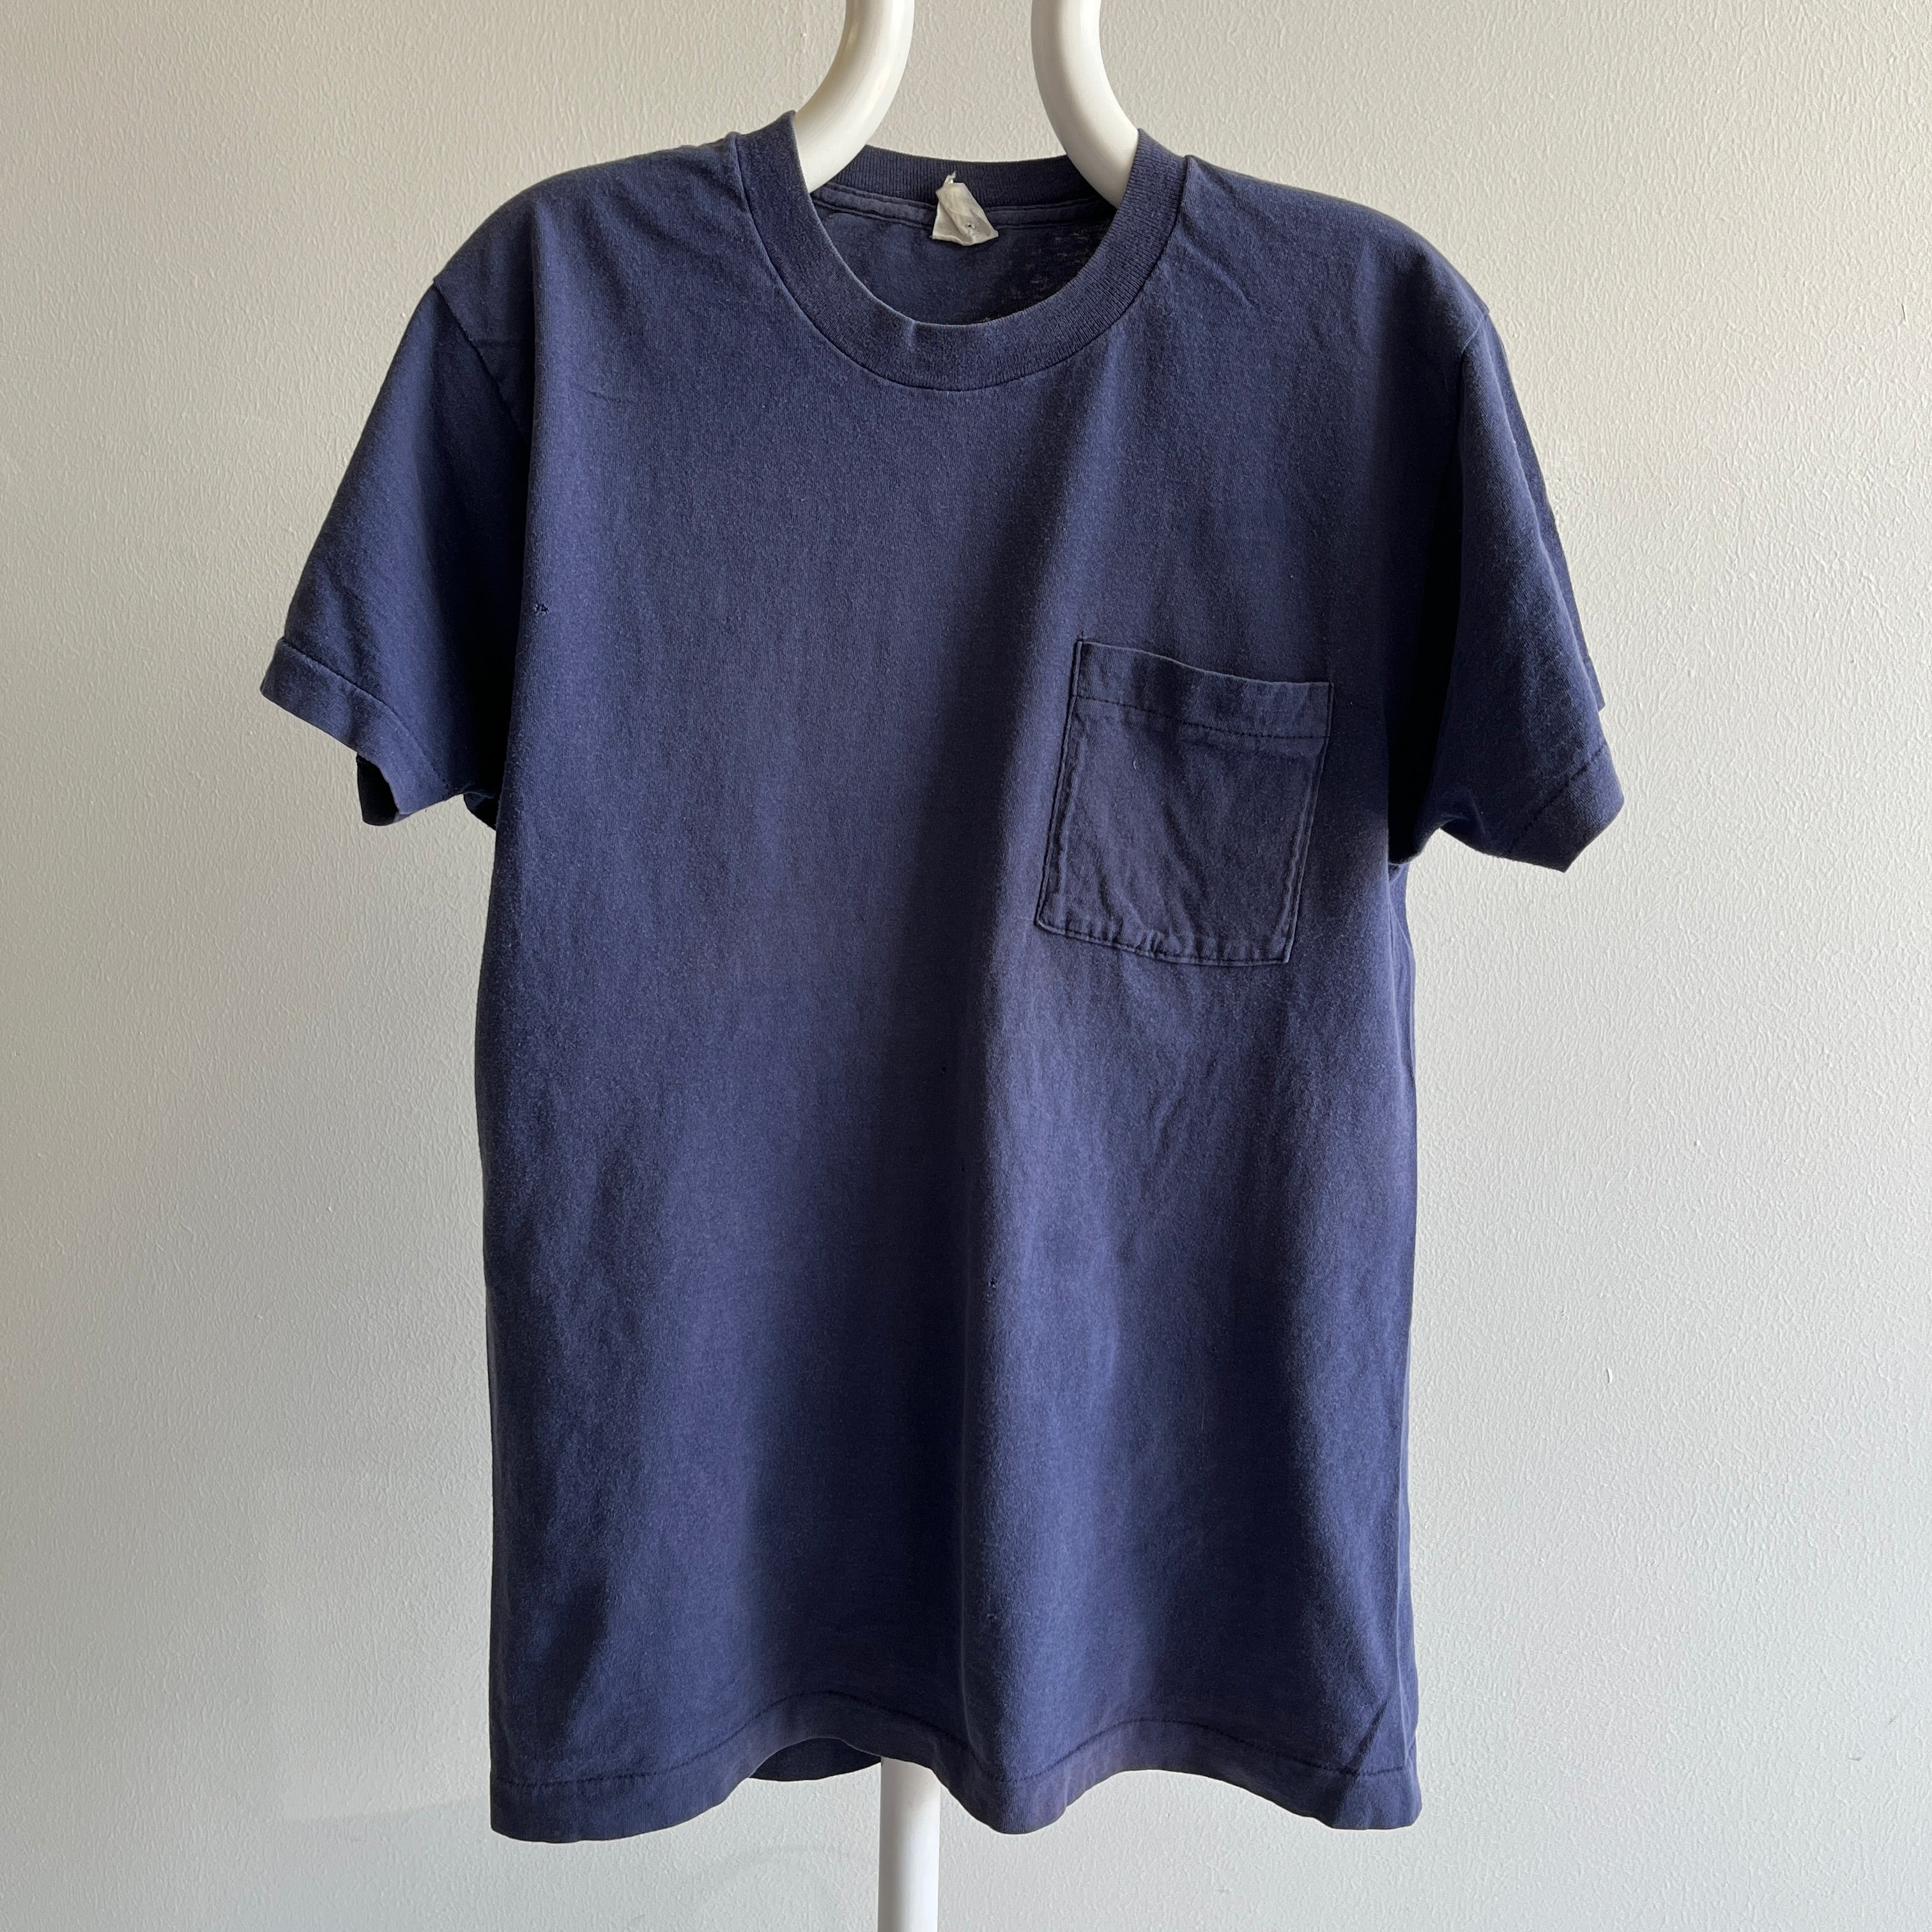 1980s FOTL (pretty sure) Blank Navy Cotton Pocket T-Shirt